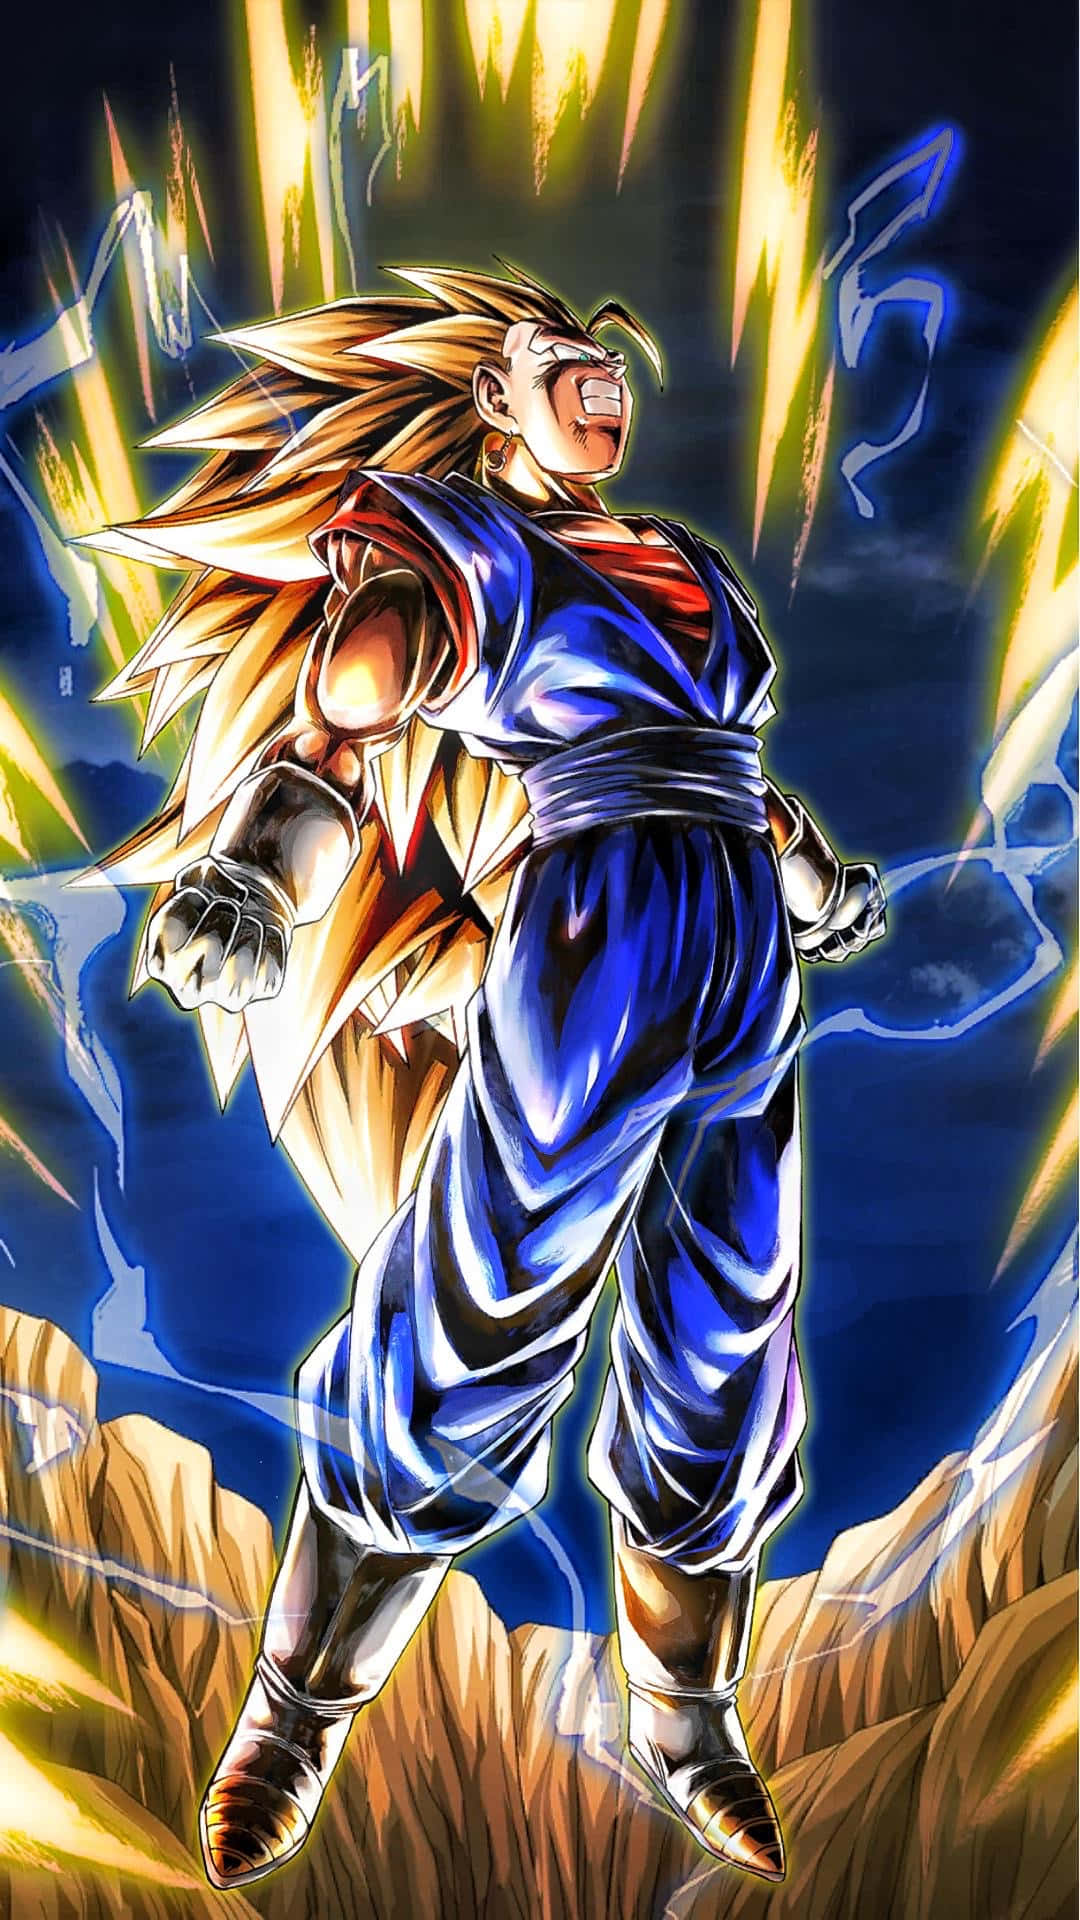 The Powered-Up form of Goku, Super Saiyan 3 Wallpaper